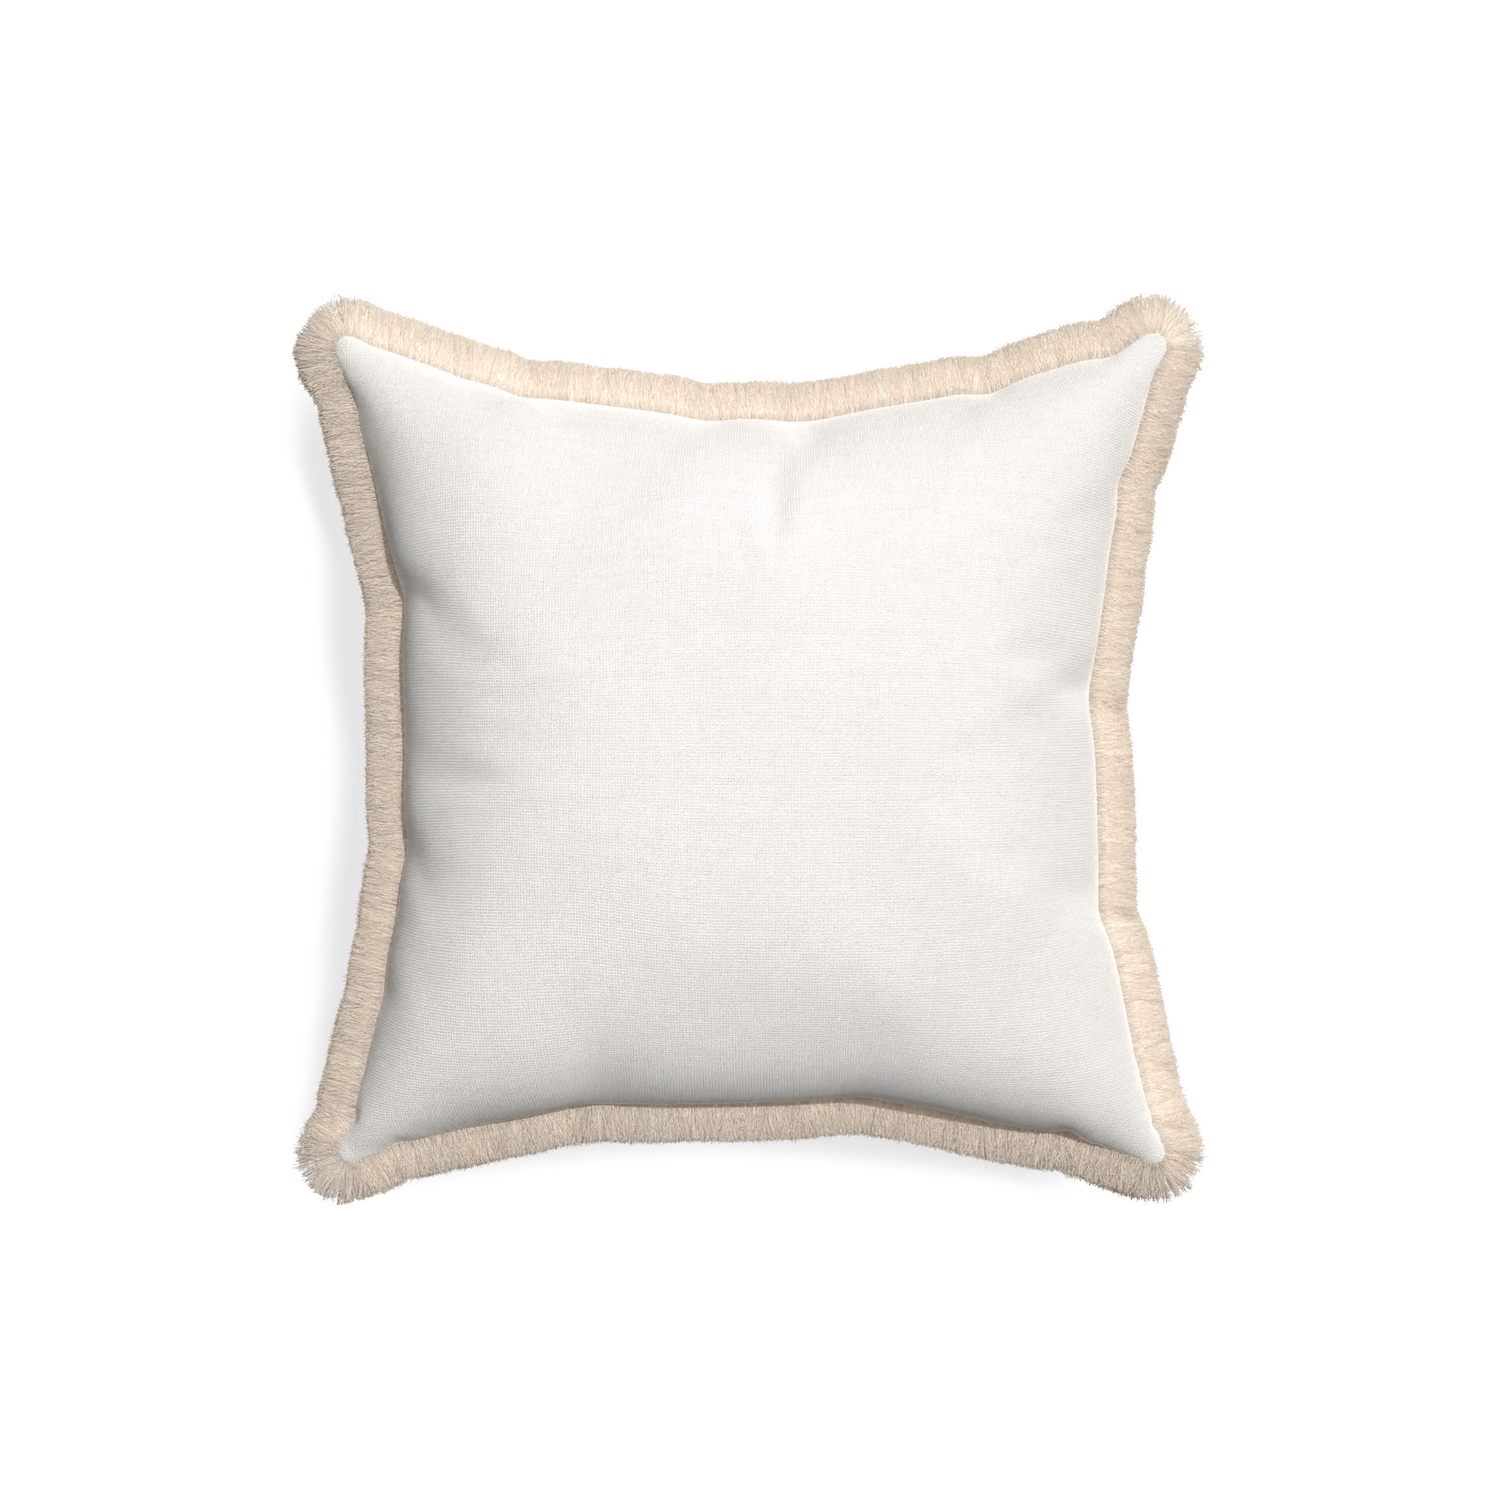 18-square flour custom pillow with cream fringe on white background